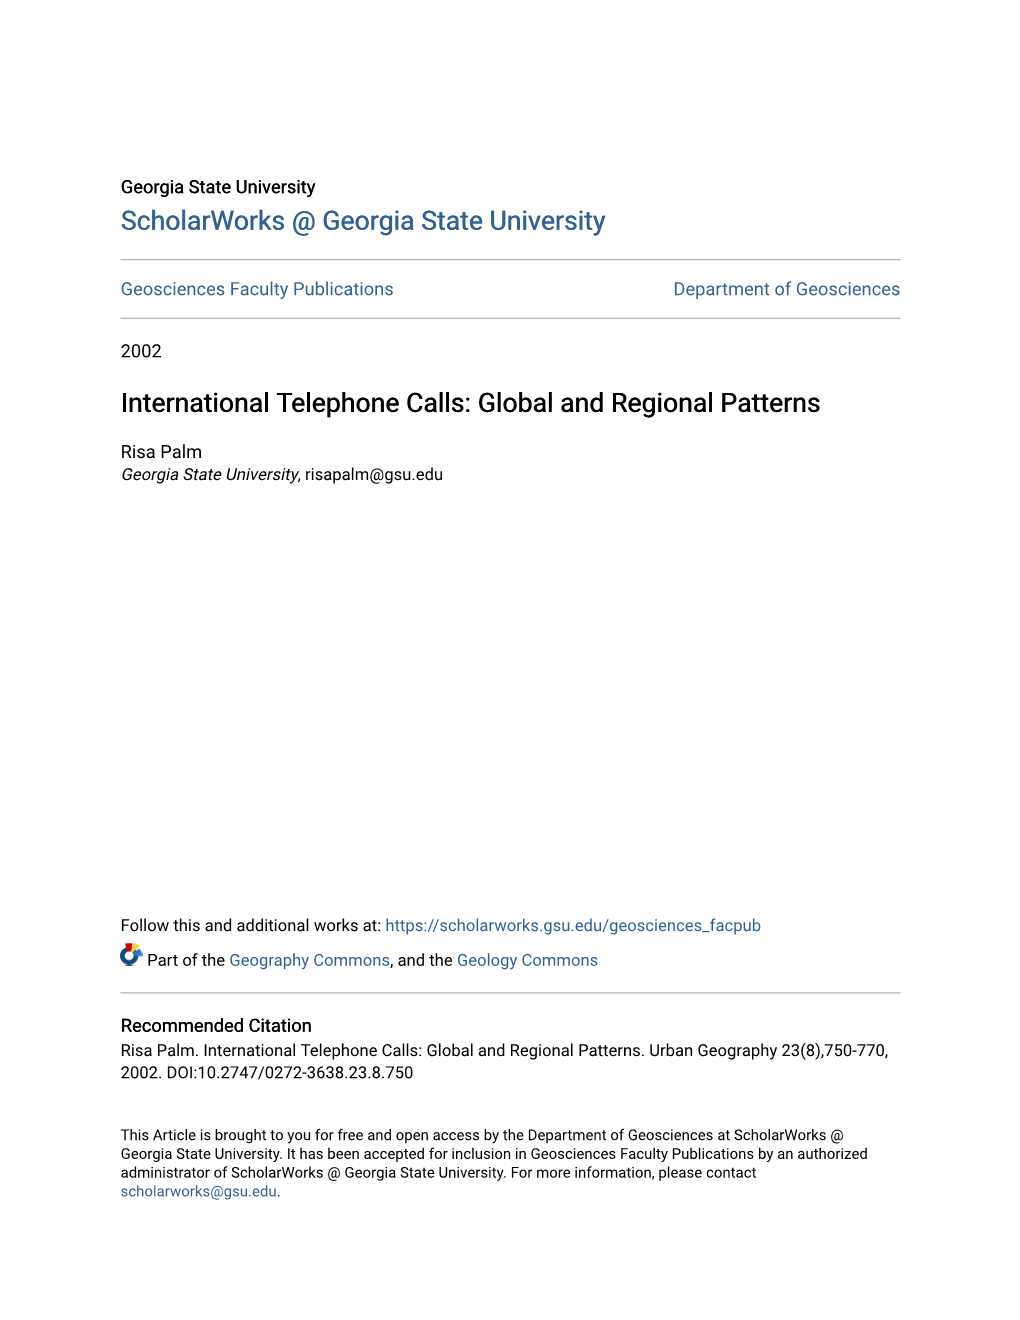 International Telephone Calls: Global and Regional Patterns